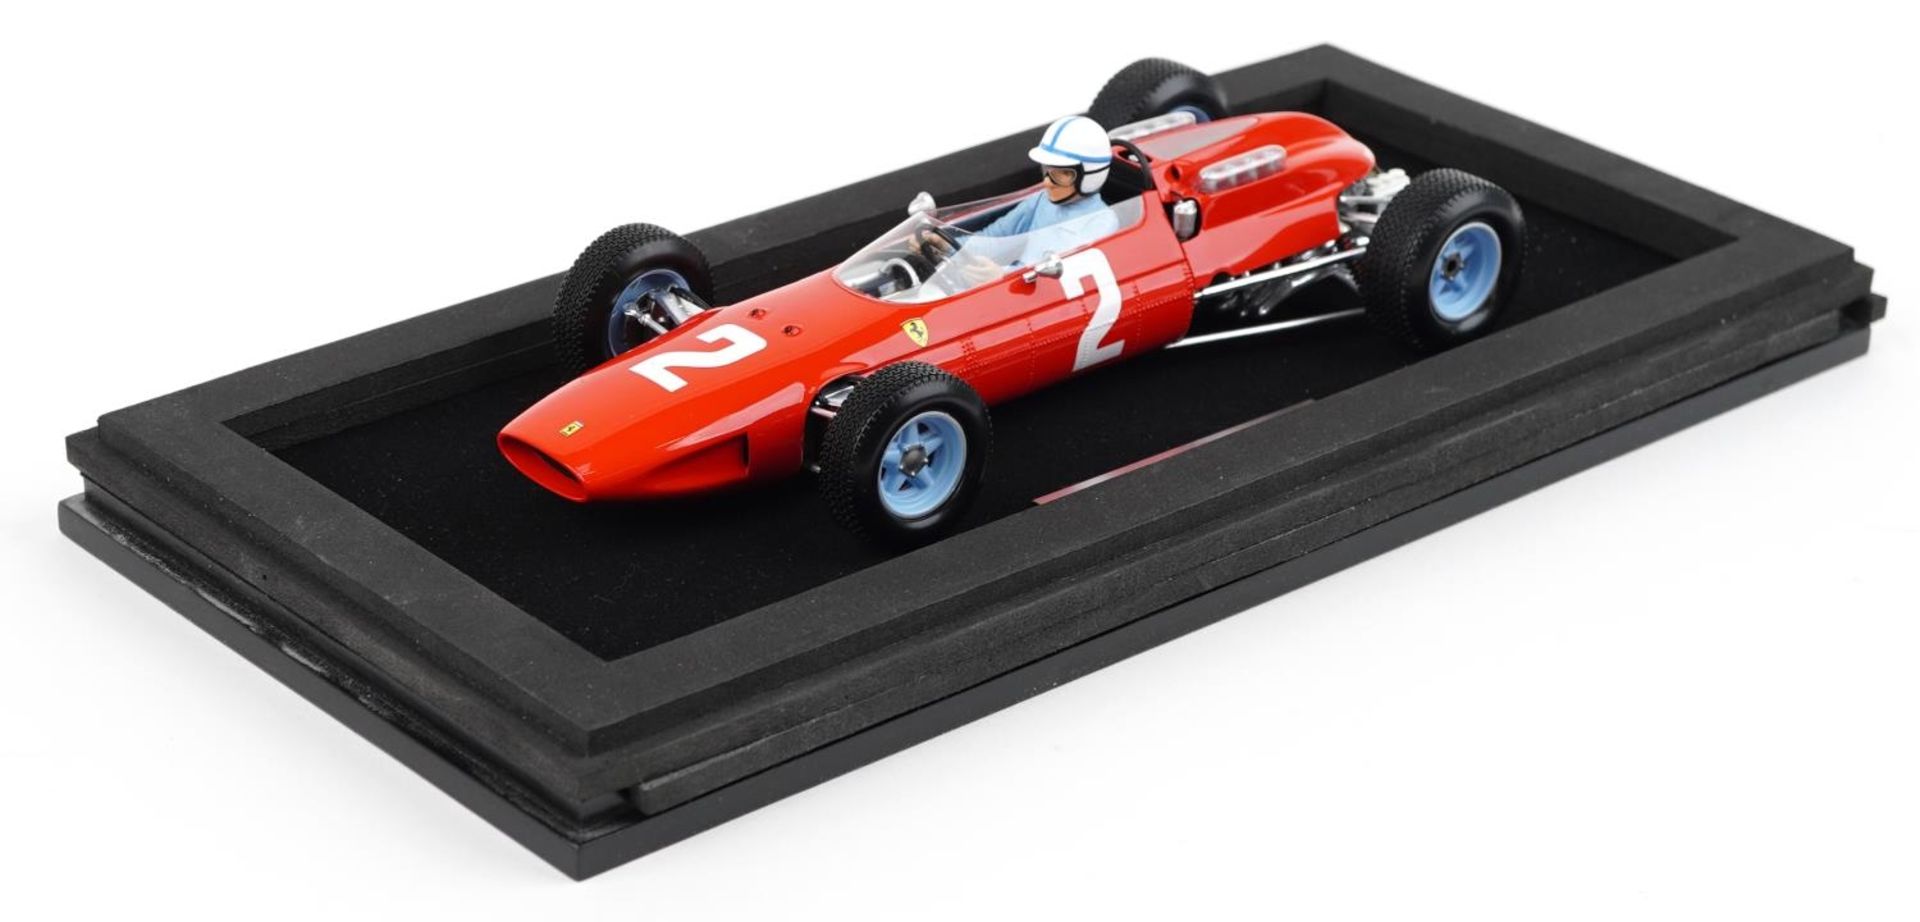 Looksmart 1:18 scale diecast model Ferrari 158 Winner of the Italian Grand Prix 1964, with box and - Image 2 of 3